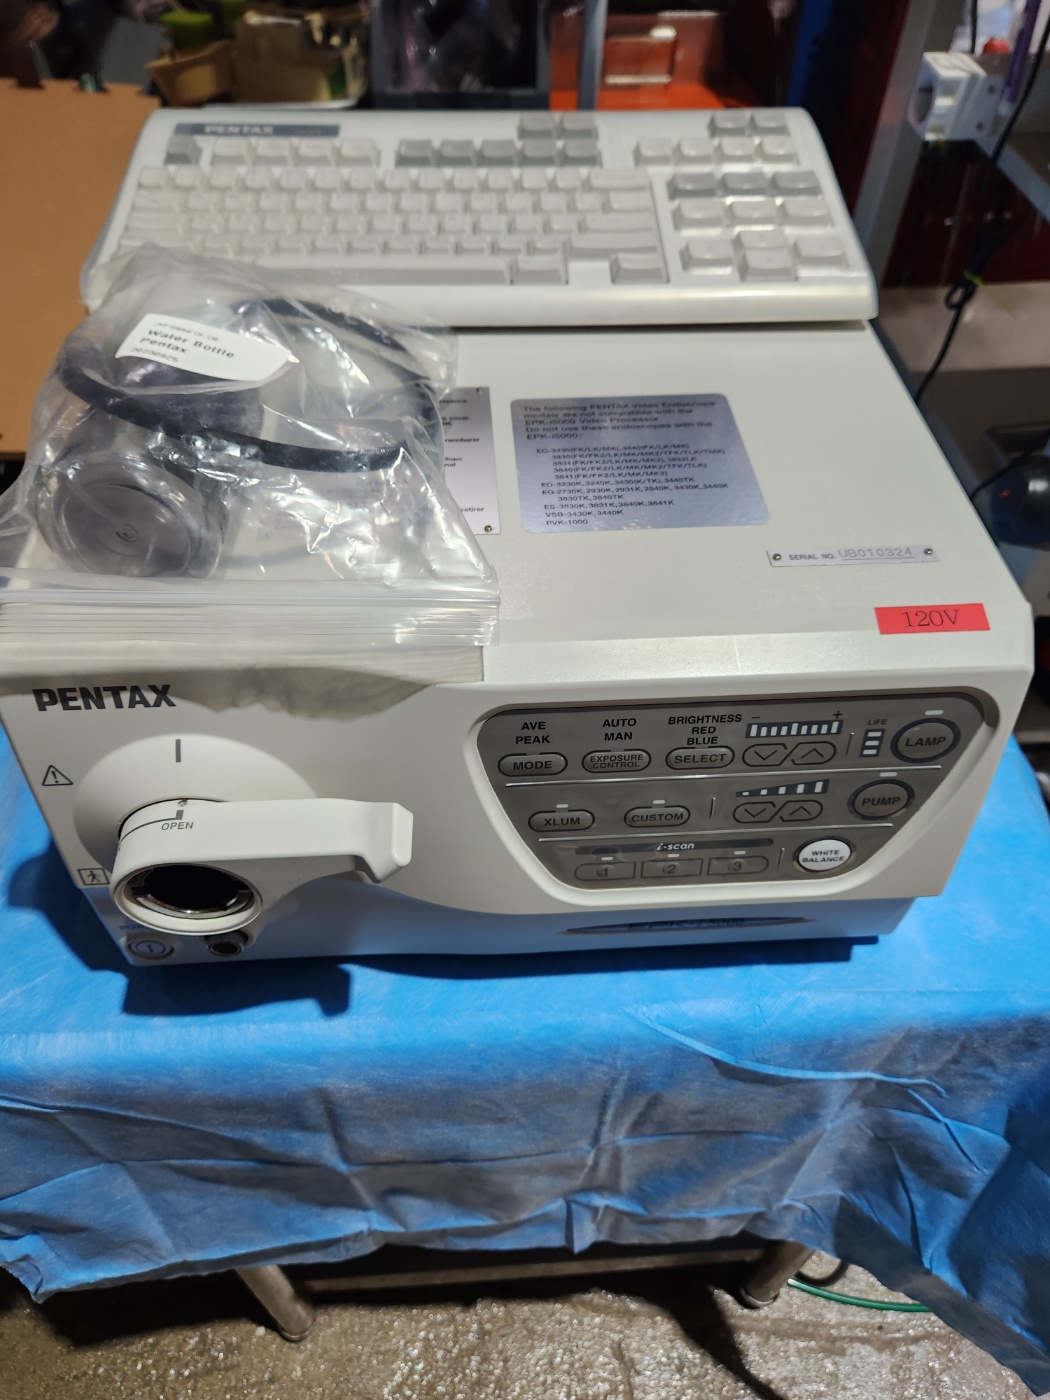 PENTAX EPK-i5000 HD Video Processor Light Source